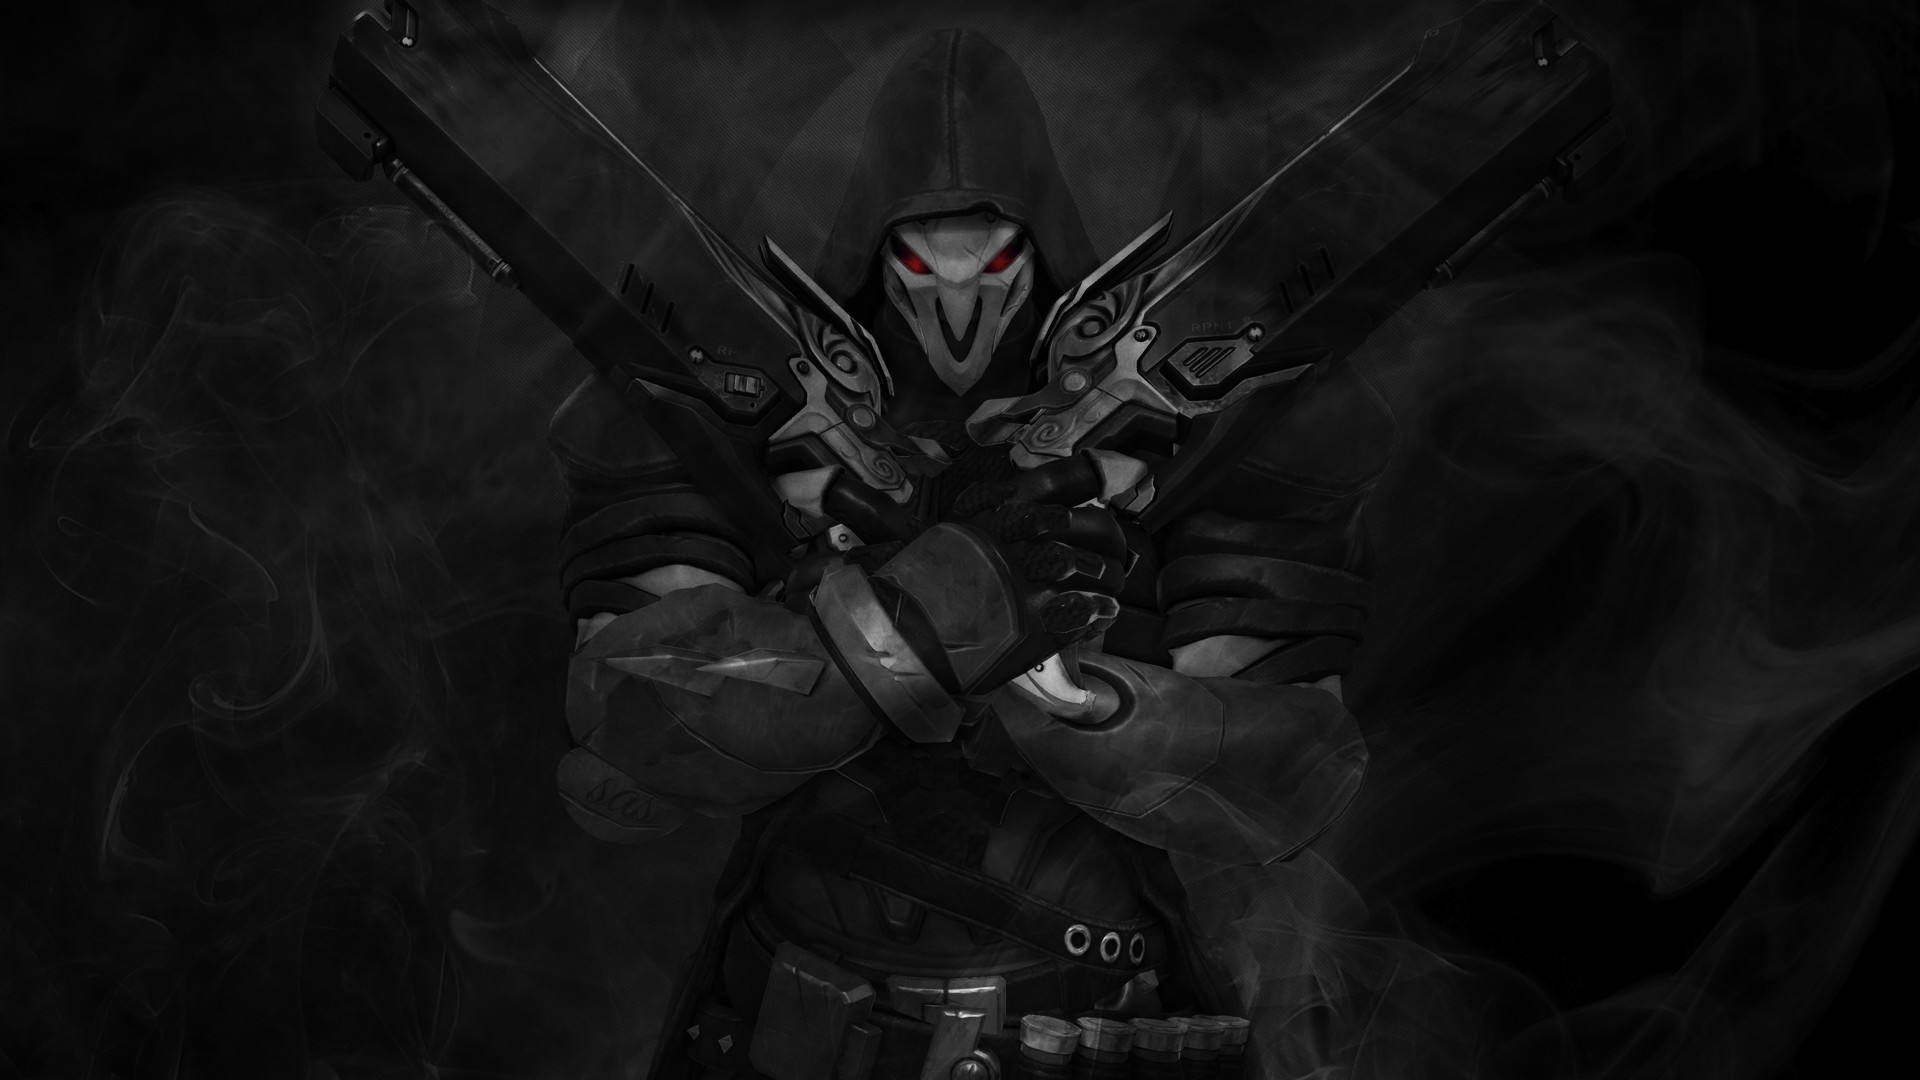 1920x1080 ... Reaper (Overwatch) Wallpaper by SAS by saszin